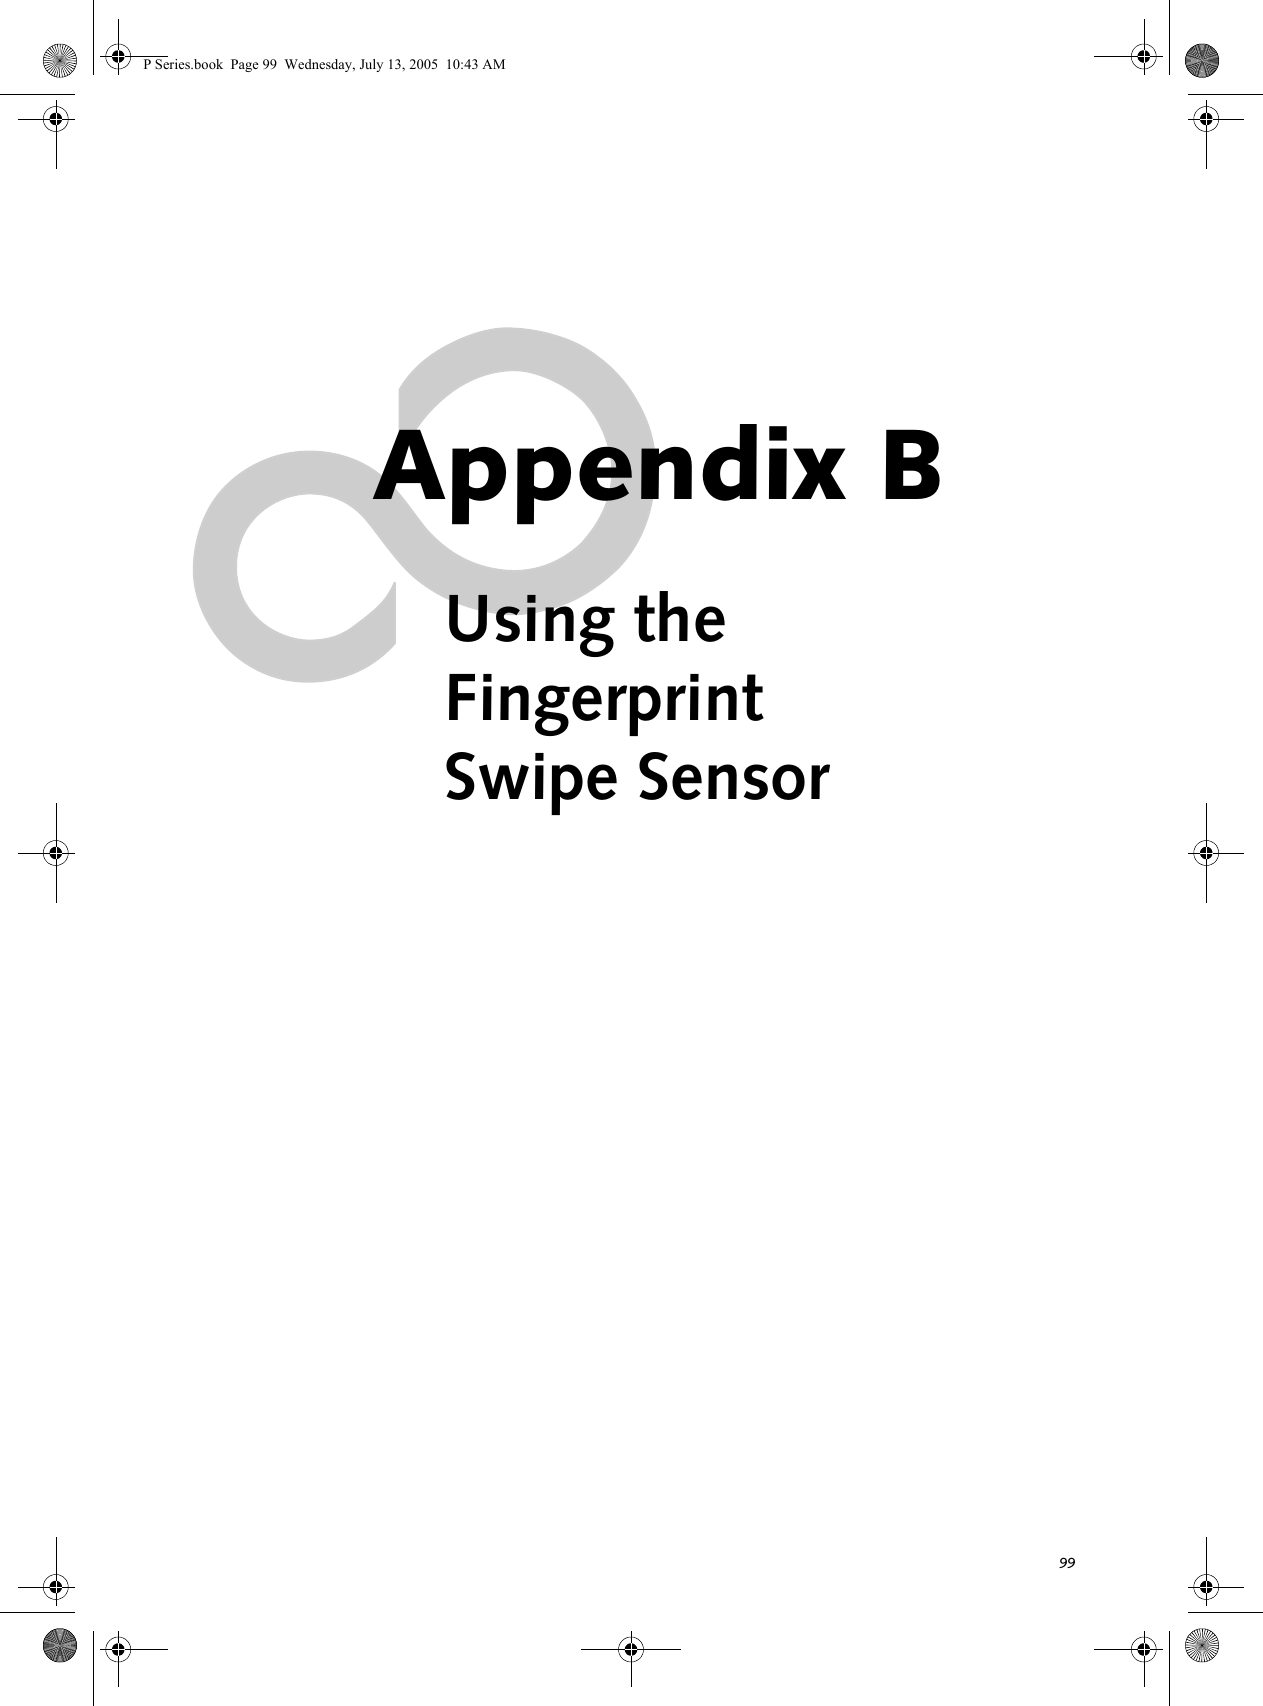 99Appendix BUsing the Fingerprint Swipe SensorP Series.book  Page 99  Wednesday, July 13, 2005  10:43 AM